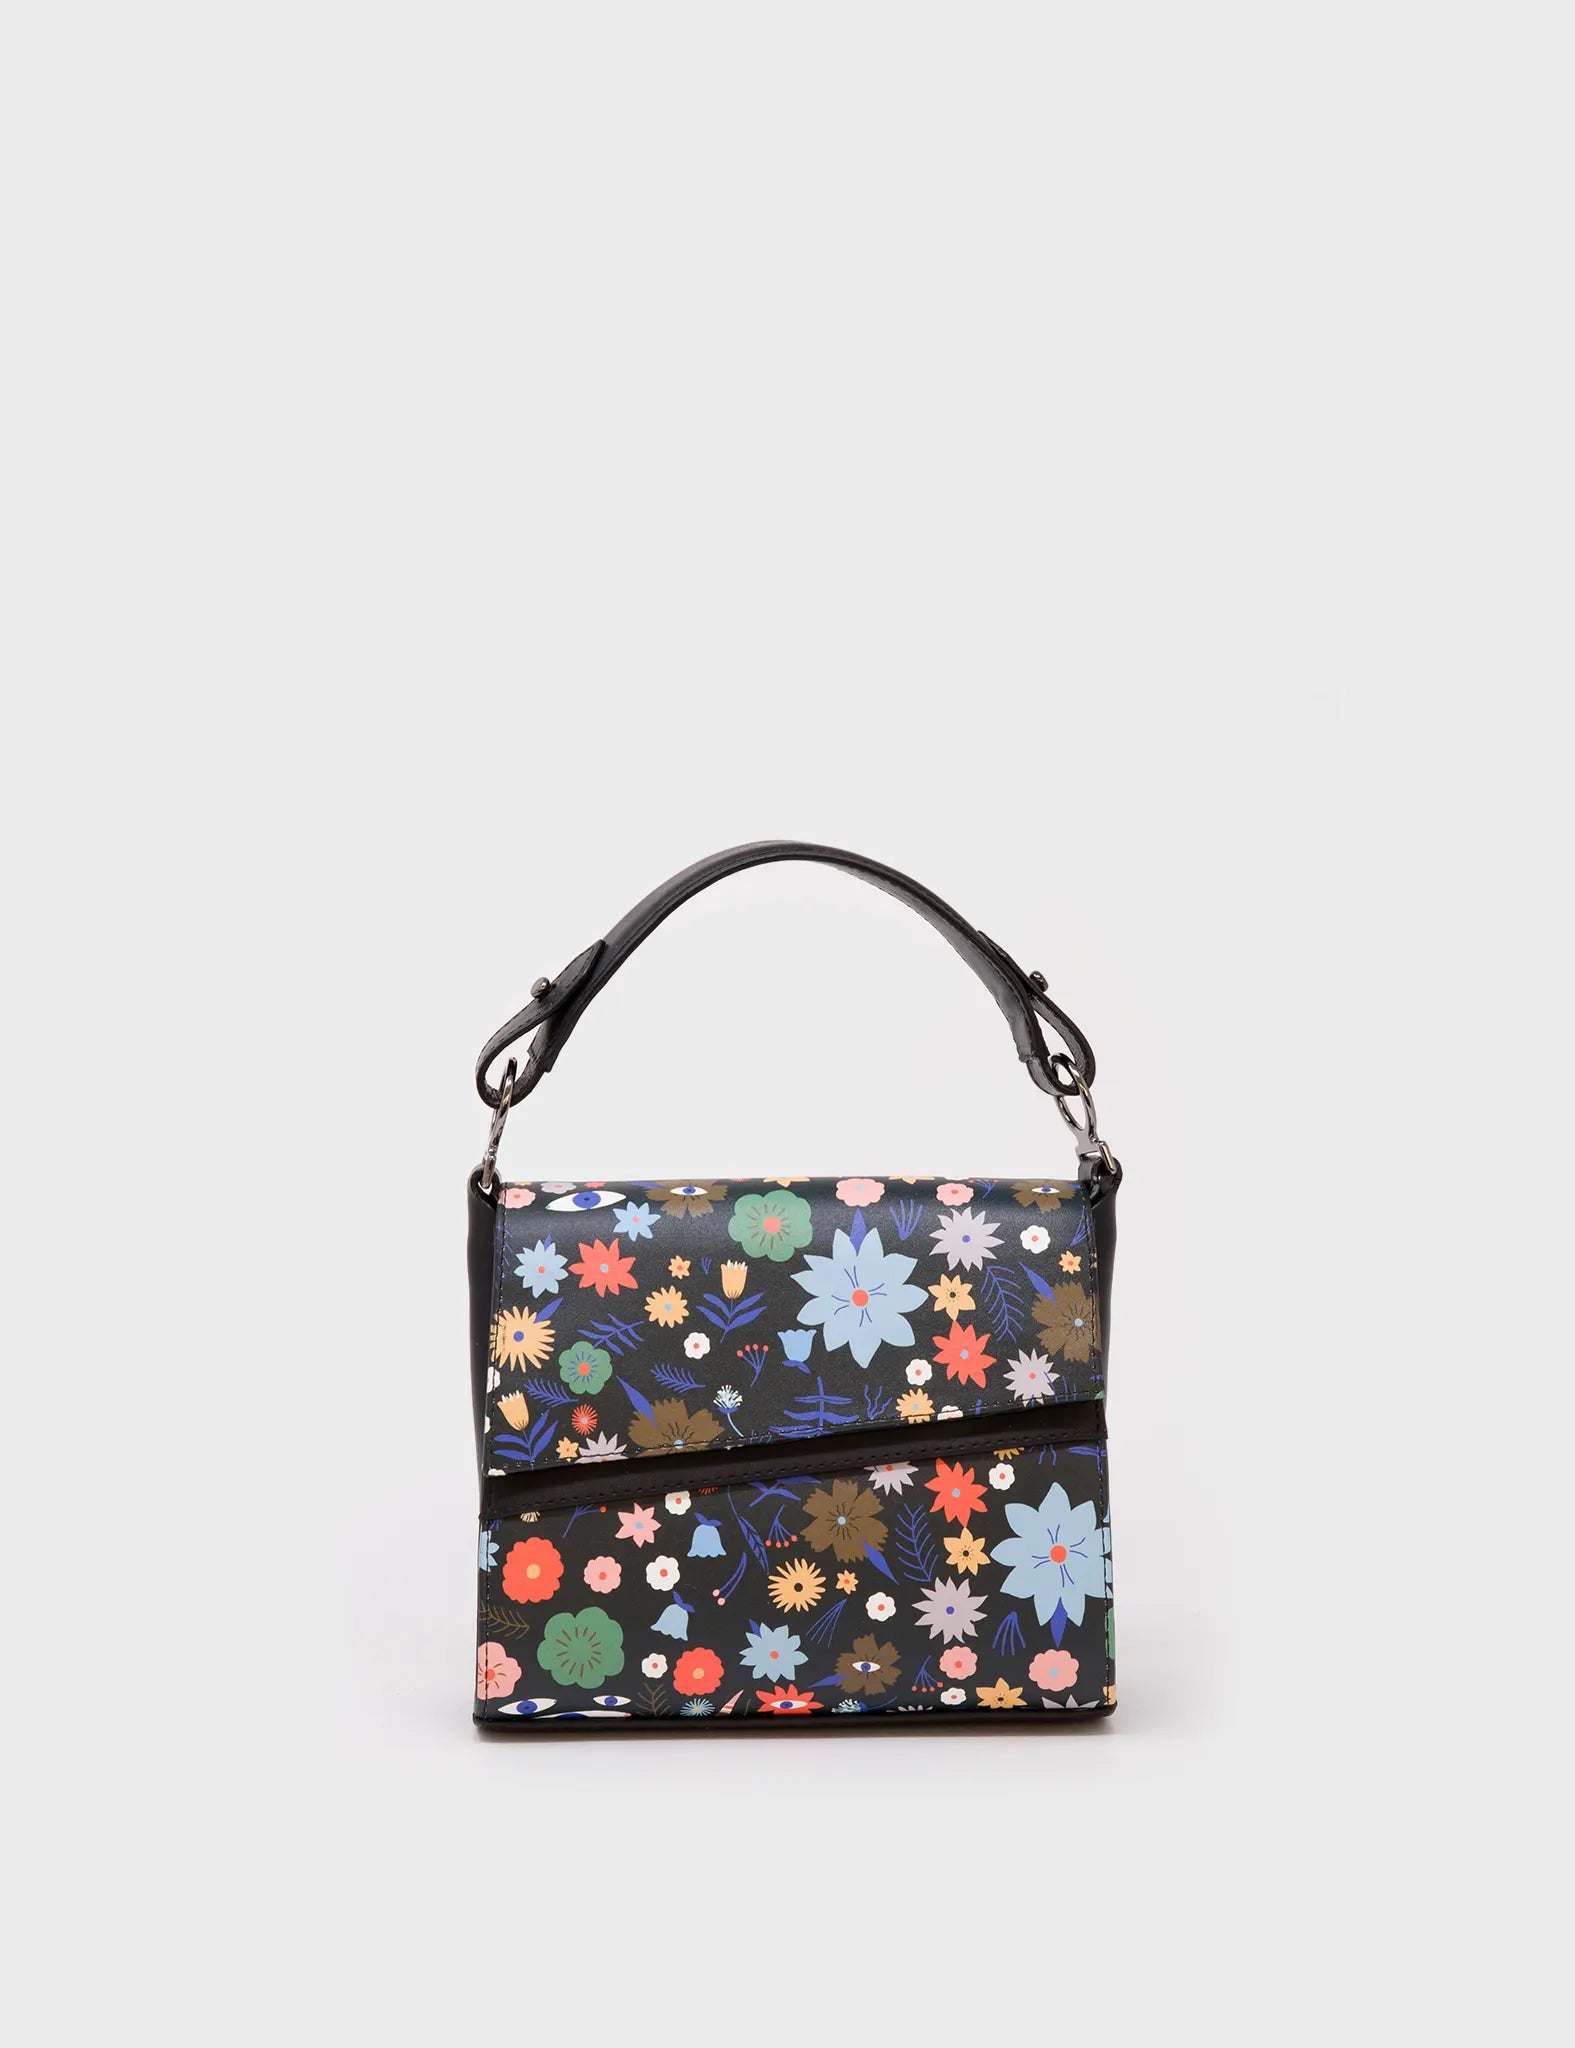 Micro Crossbody Handbag Black Leather -Flower Patter Print  - front